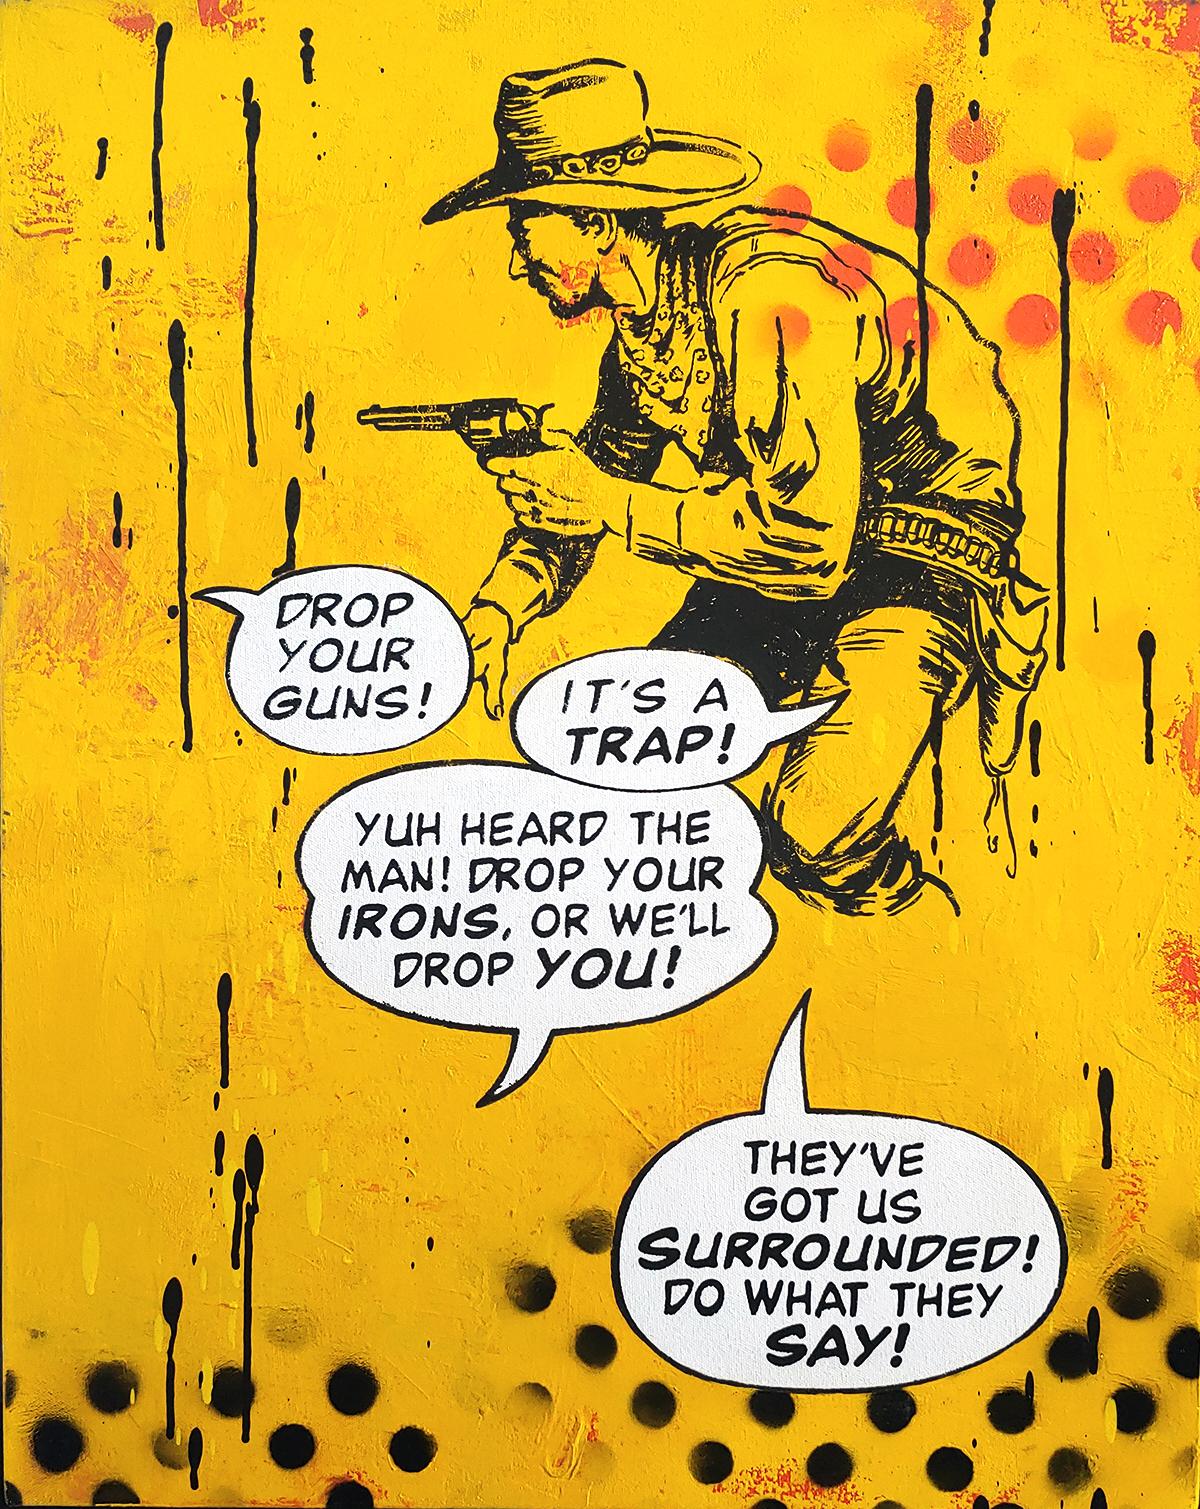 Matt Straub Abstract Painting - "Drop Your Guns" oil on canvas Cowboy Western POP art 